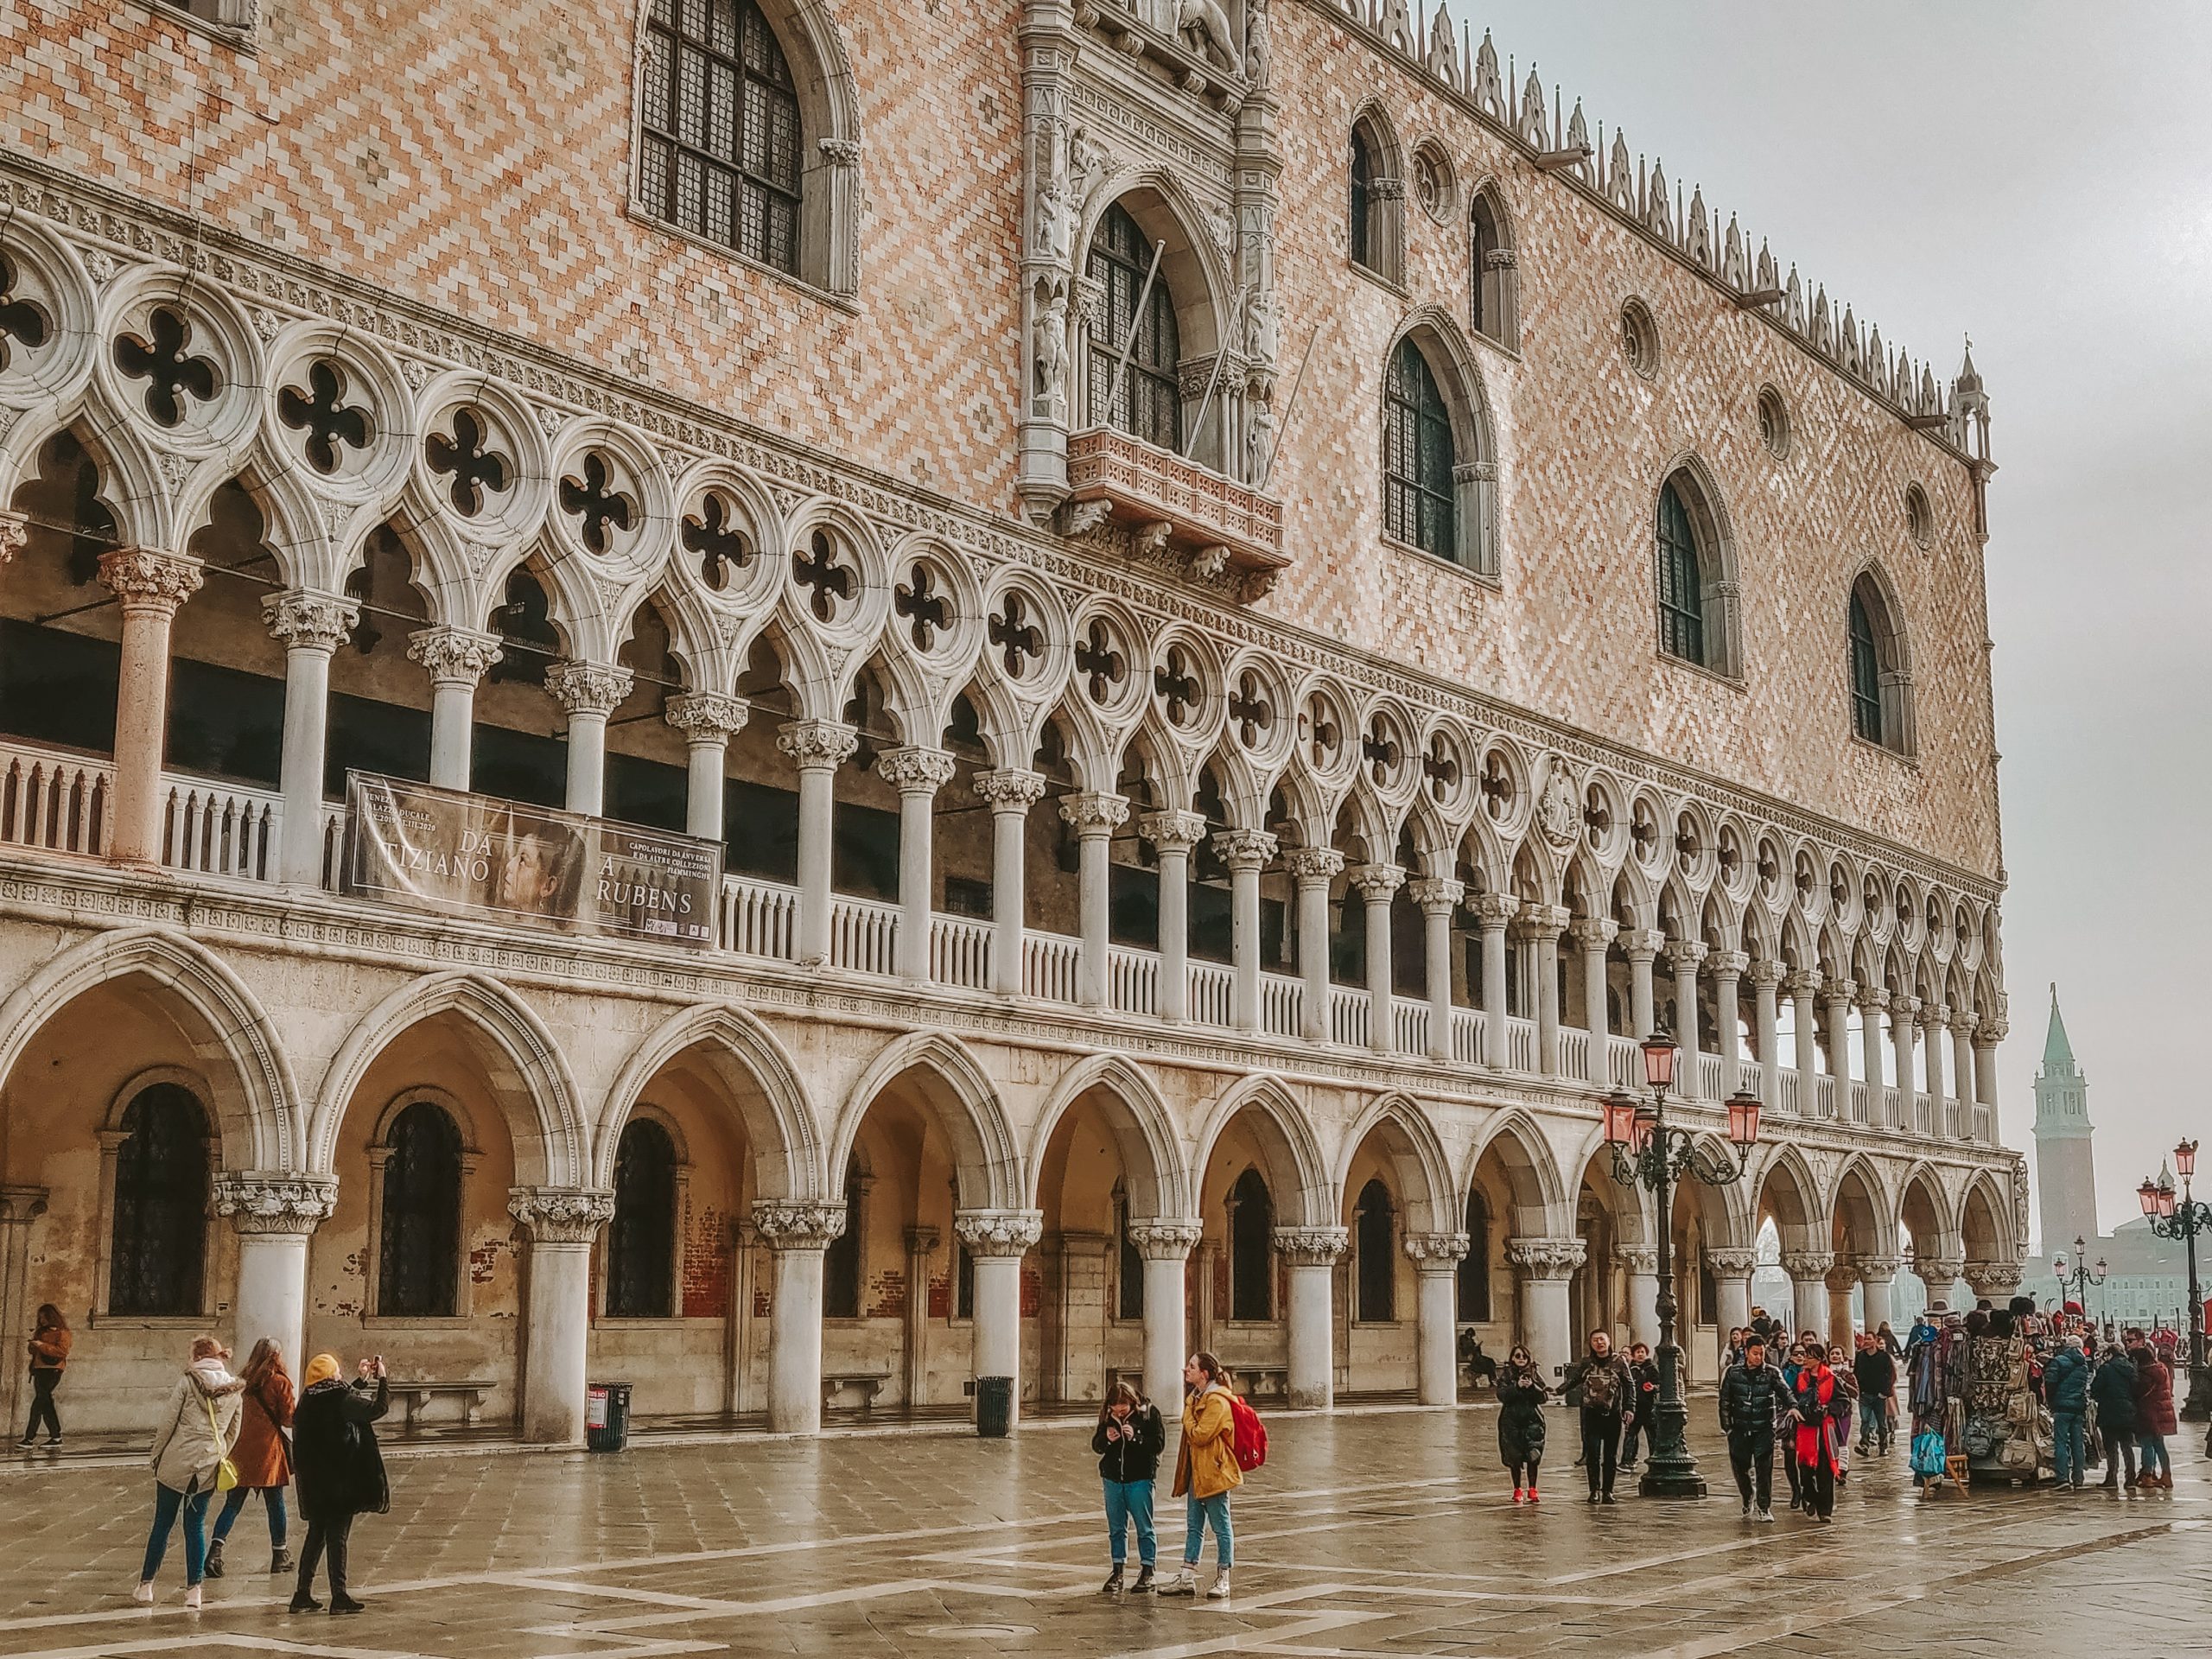 Doge's Palace Venice Italy